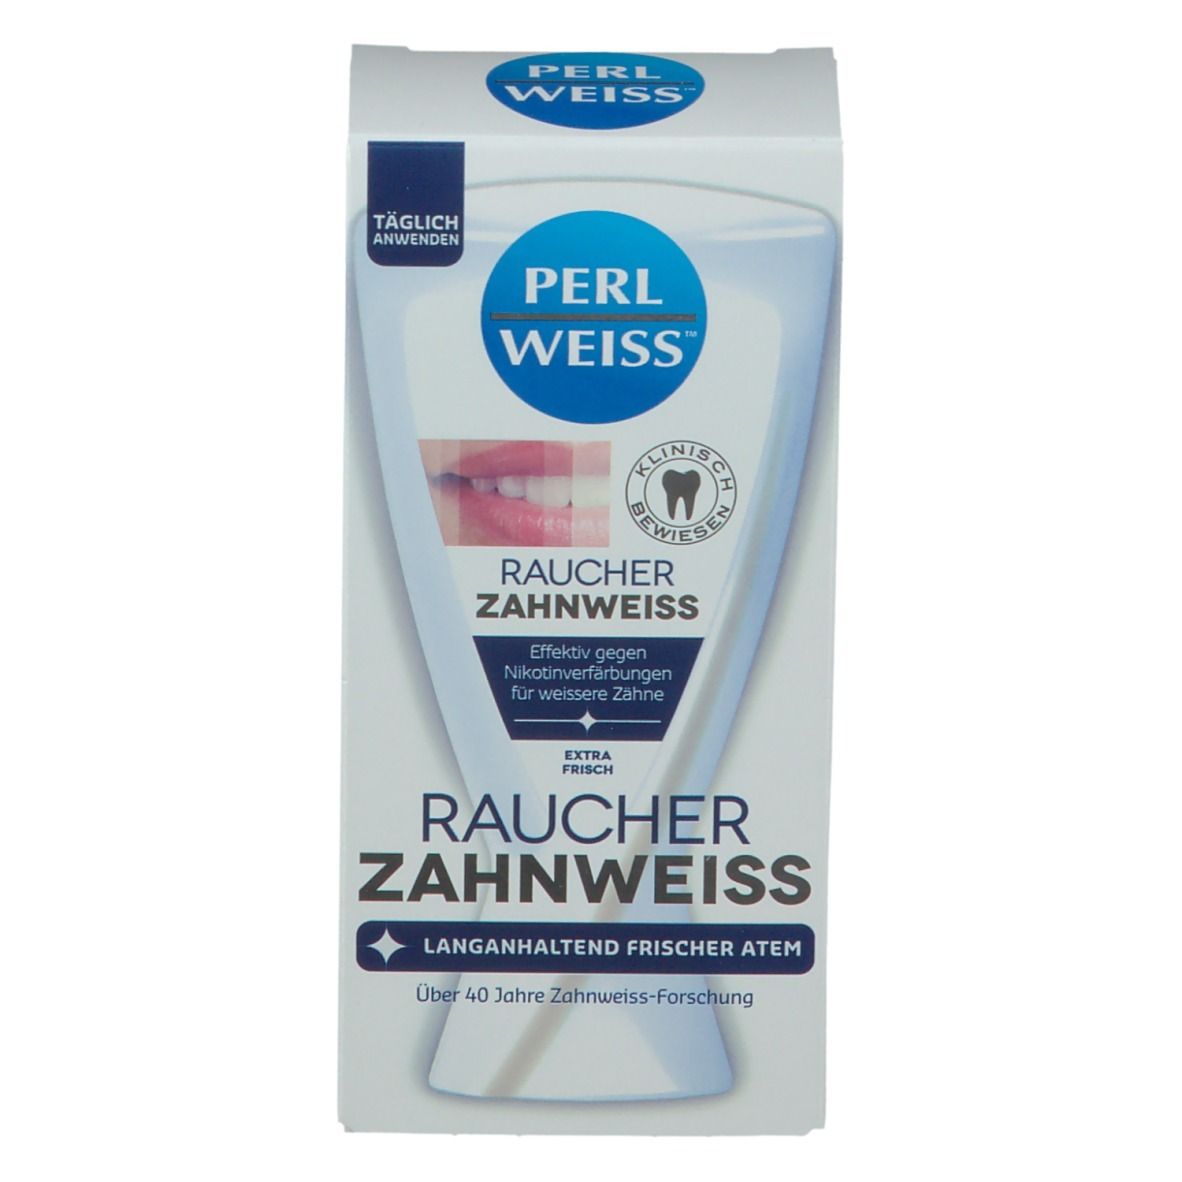 PERLWEISS® Raucher-Zahnweiss